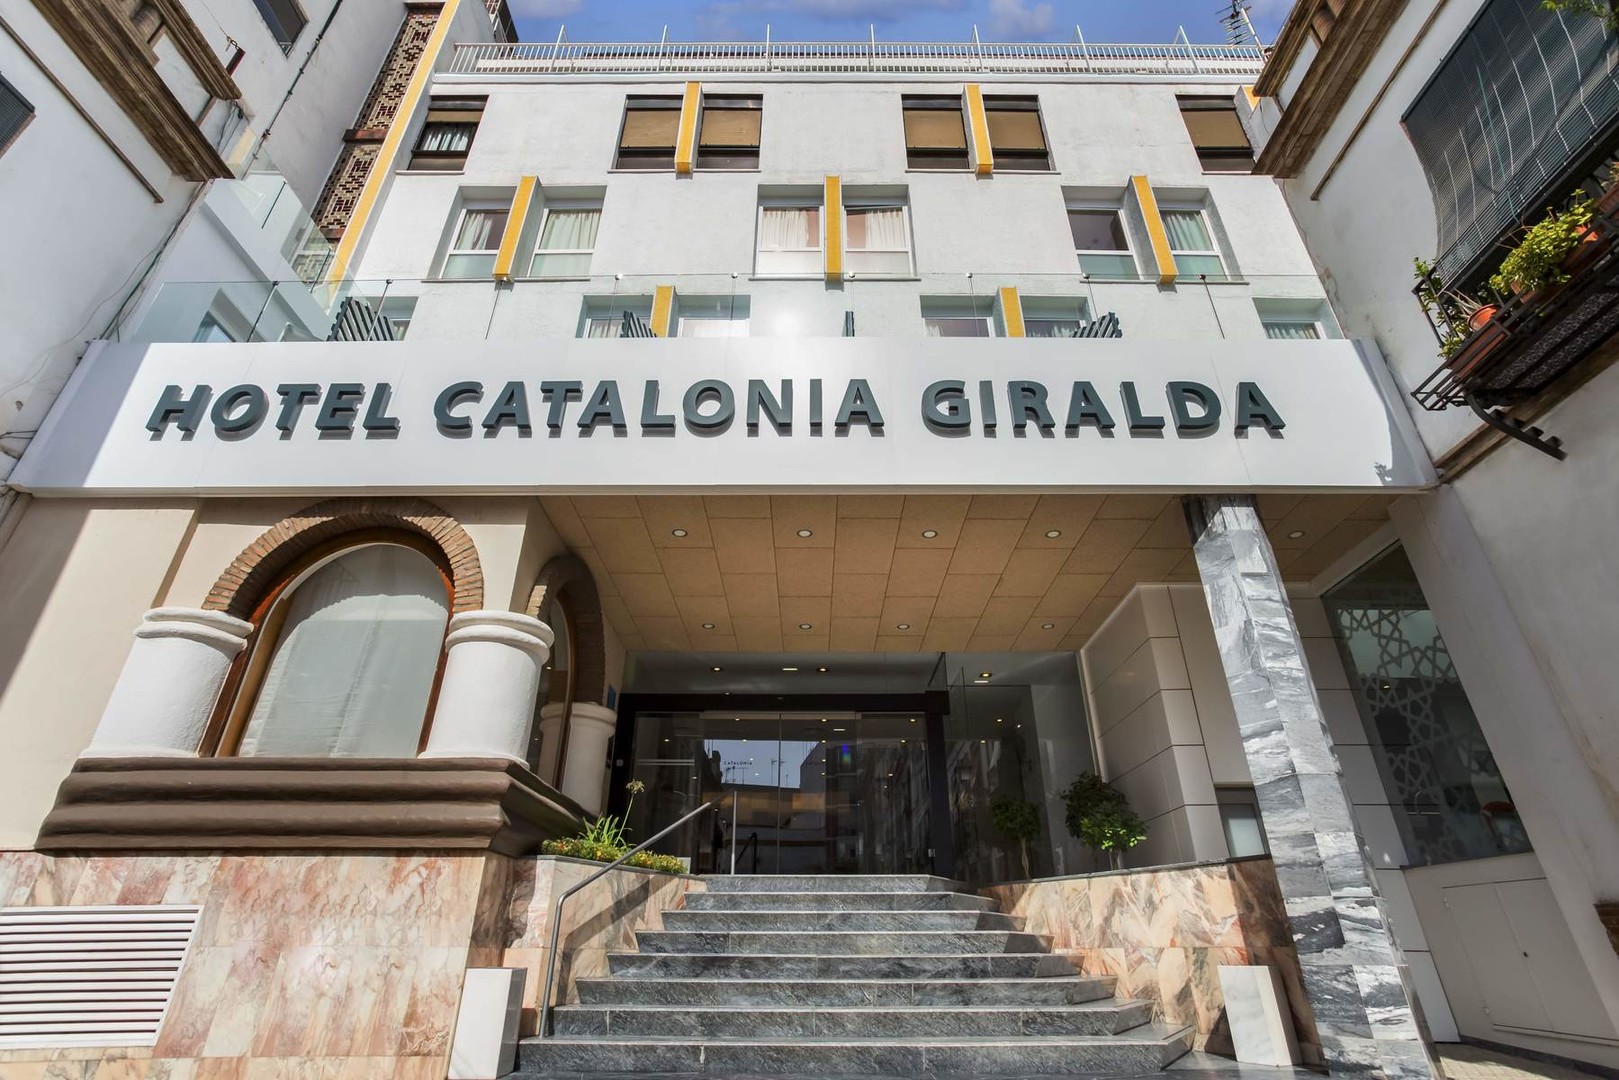 Obrázek hotelu Catalonia Giralda